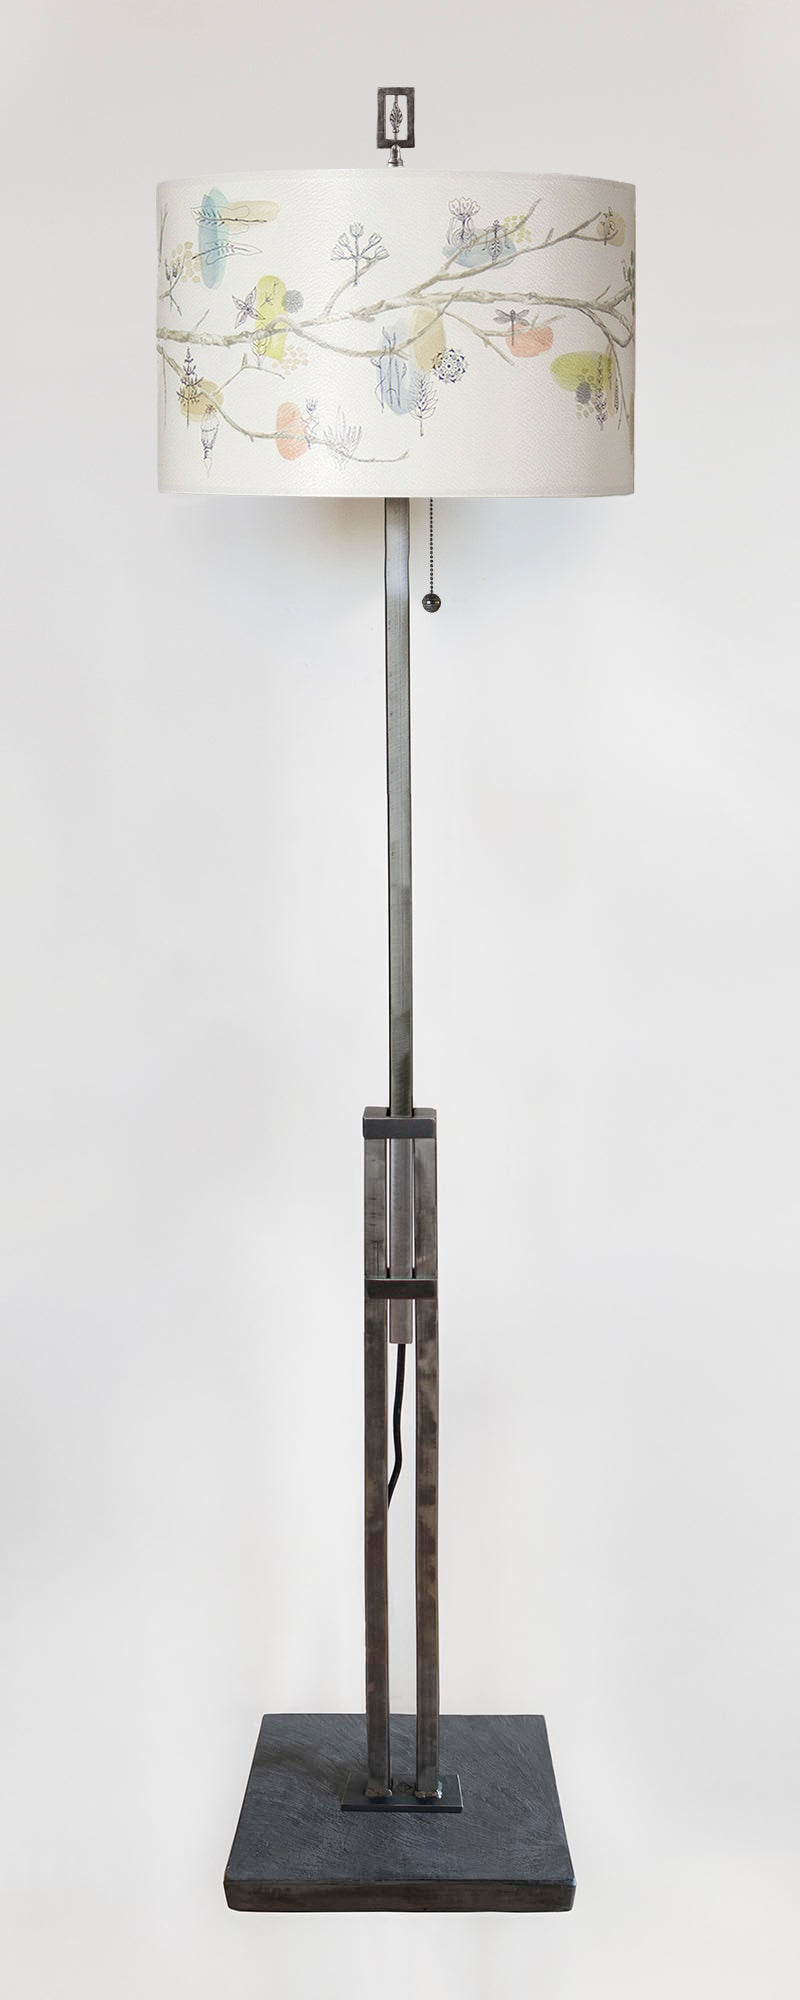 Janna Ugone & Co Floor Lamps Adjustable-Height Steel Floor Lamp with Large Drum Shade in Artful Branch